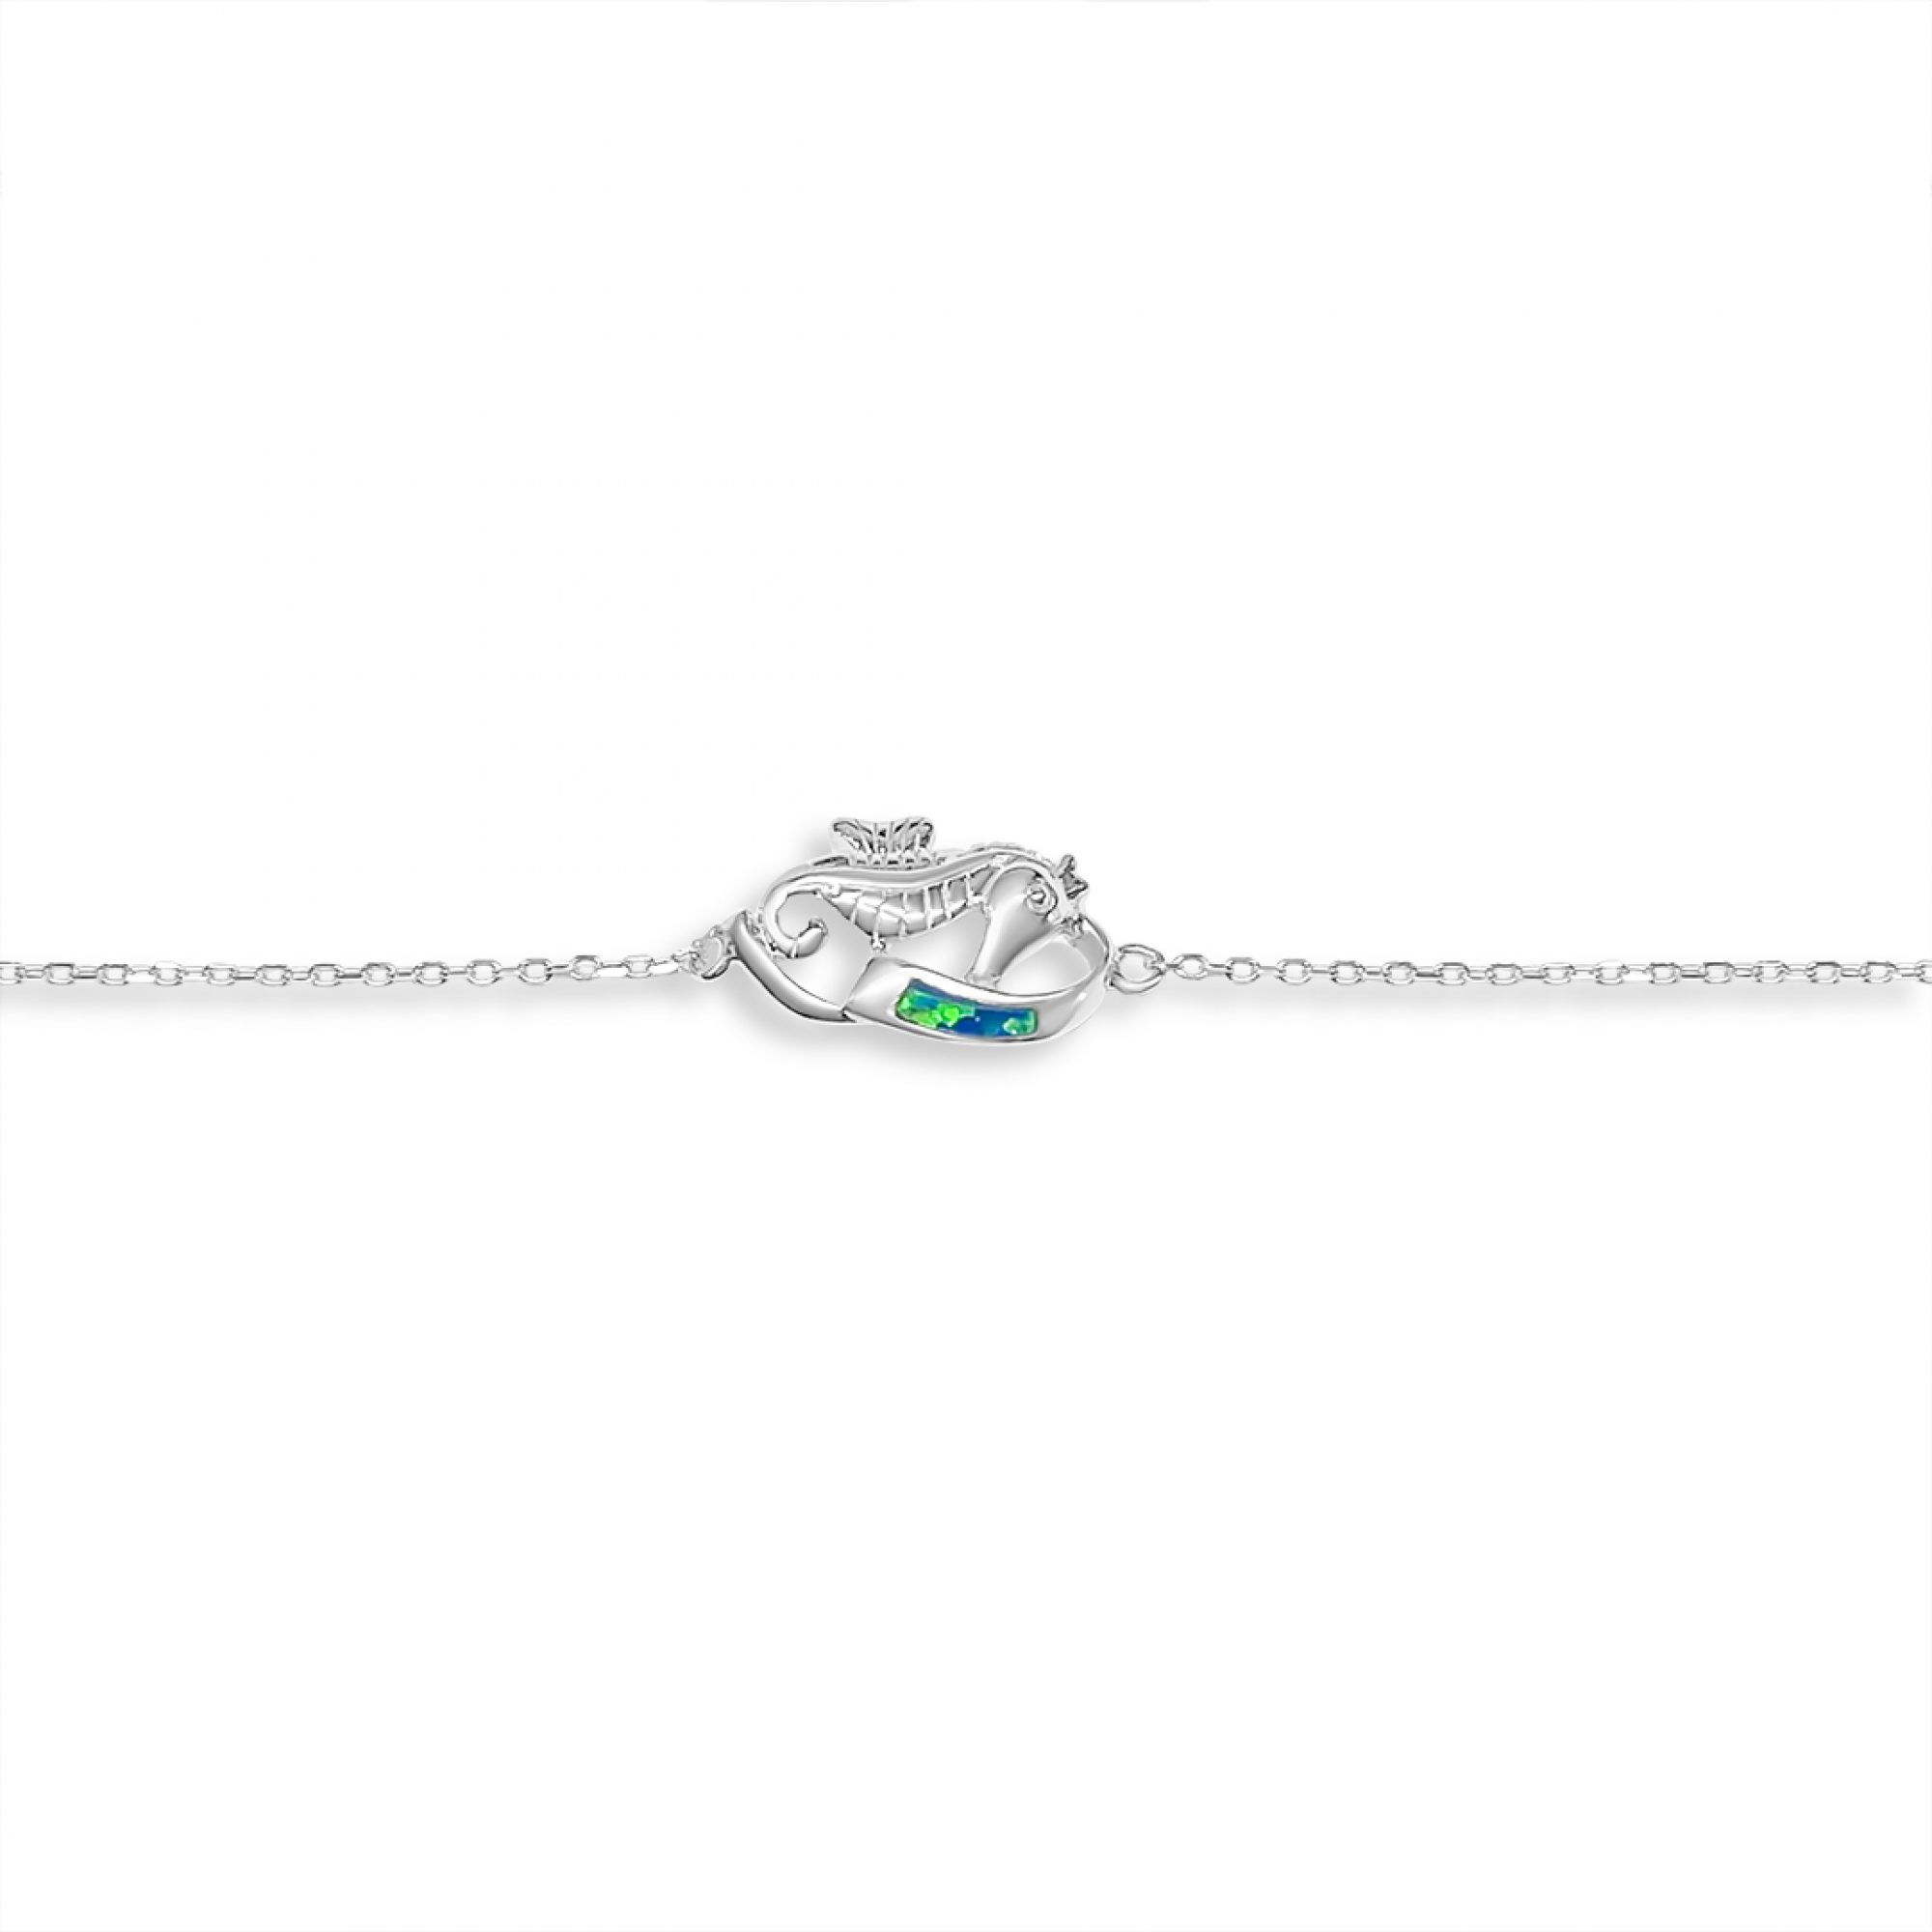 Seahorse bracelet with opal stone